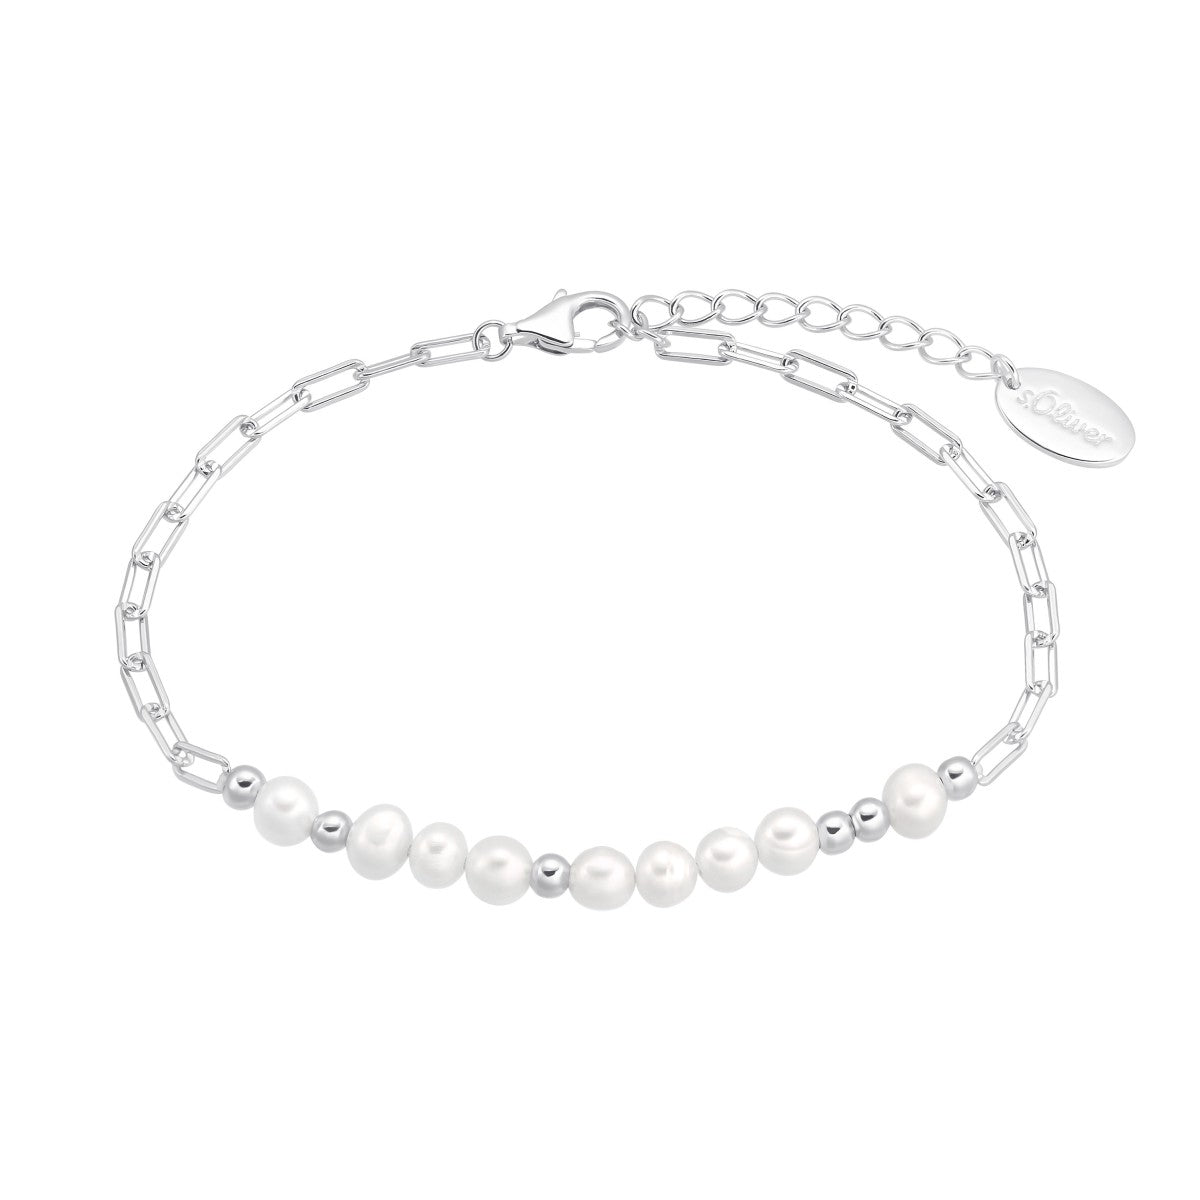 Preiswert24 Armkette Armband Perlen Jewel – s.Oliver 2034891 Silber Damen